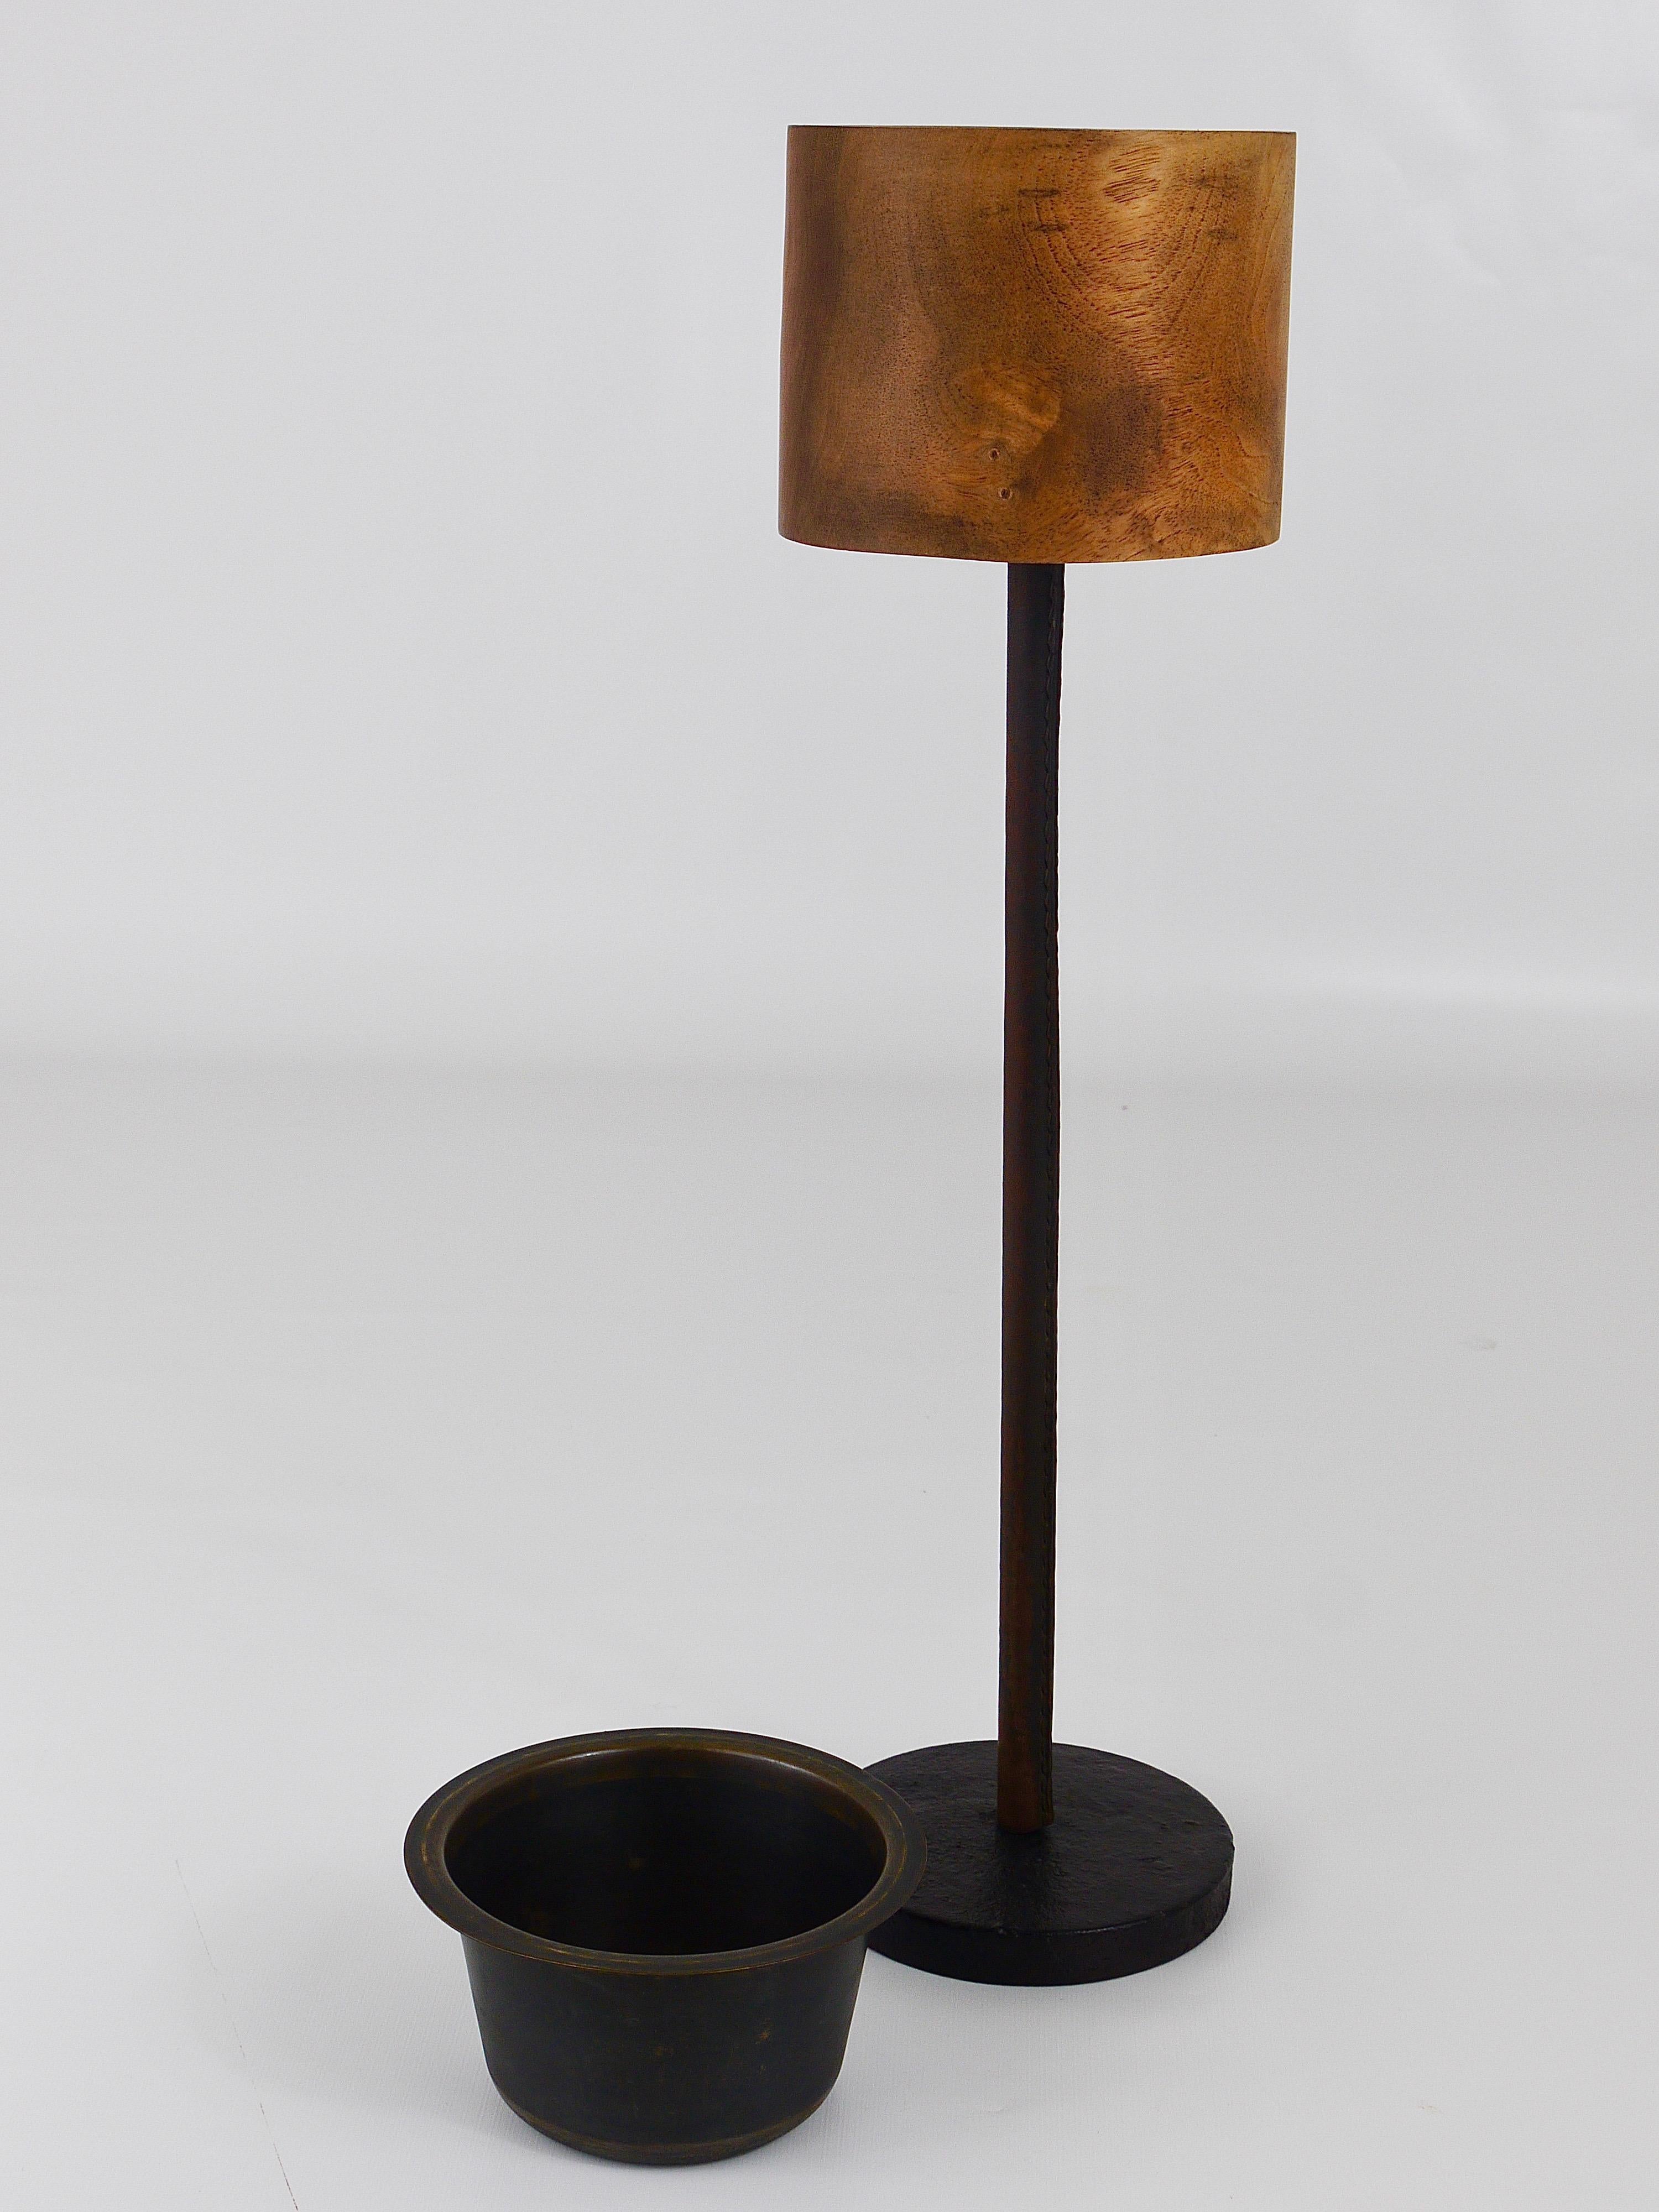 Carl Aubock Modernist Walnut Leather Candlestick Candle Holder, Austria, 1950s For Sale 2